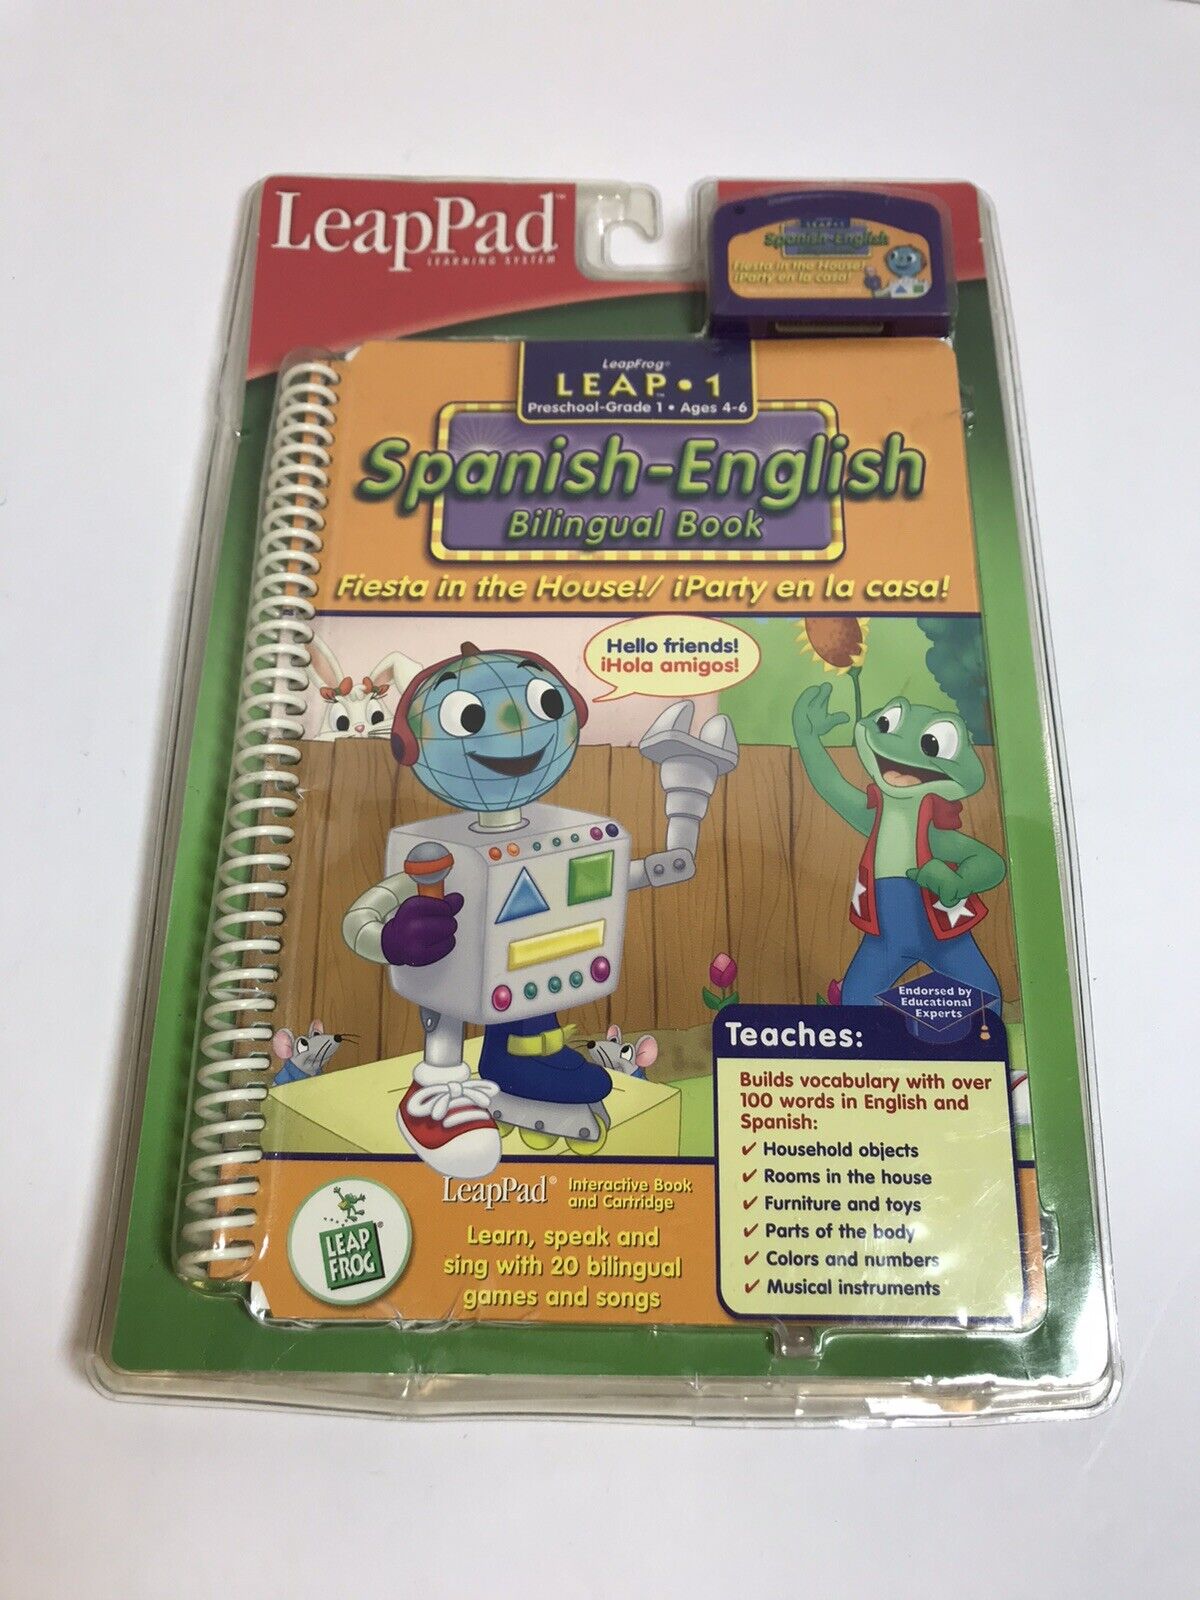 NEW LeapFrog LeapPad Leap 1 Preschool-Grade 1 Spanish-English Bilingual Book